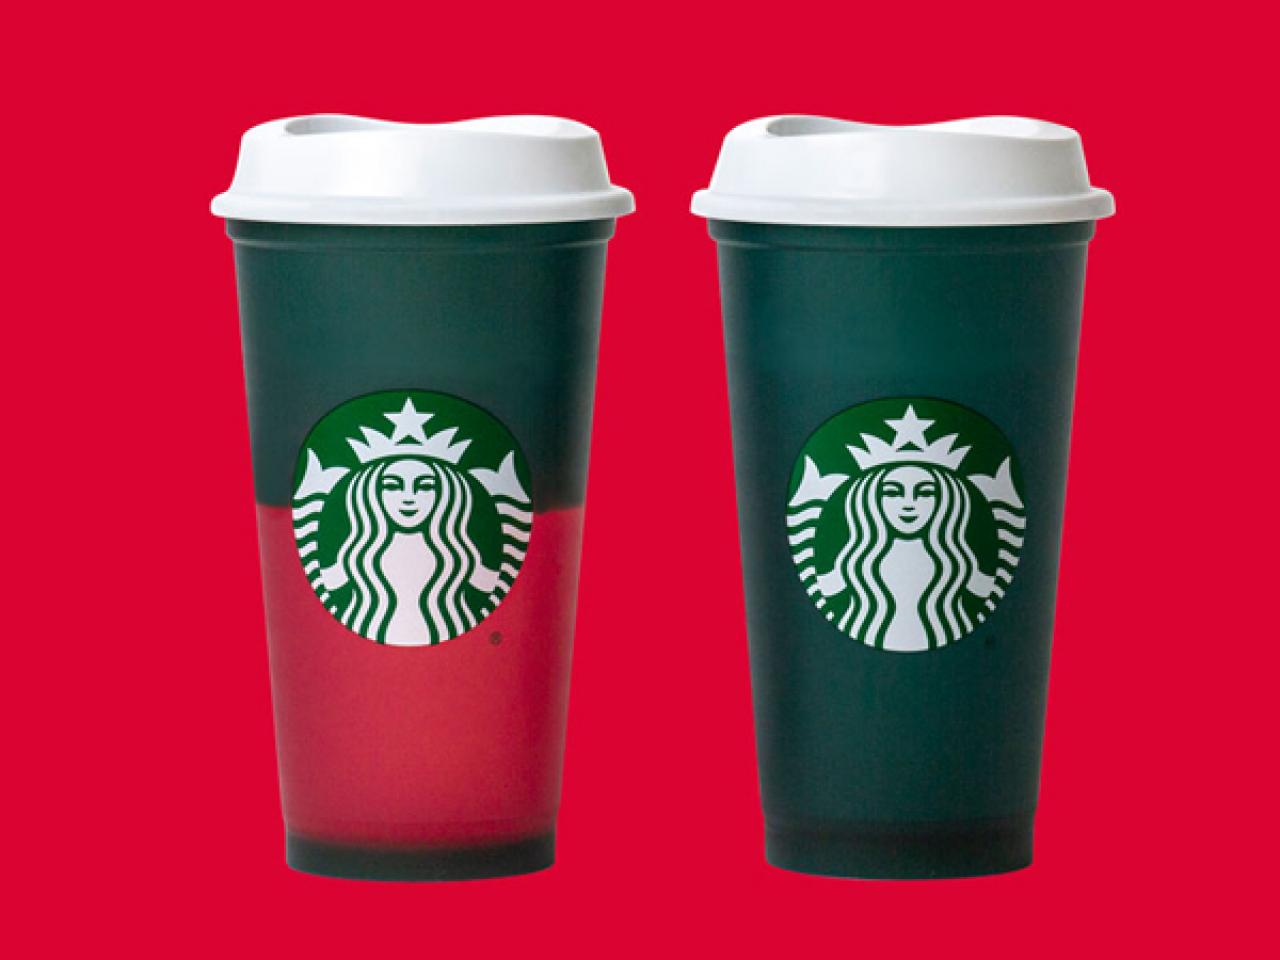 https://food.fnr.sndimg.com/content/dam/images/food/fullset/2020/11/11/Starbucks-Holiday-Color-Changing-Cup_s4x3.jpg.rend.hgtvcom.1280.960.suffix/1605123721103.jpeg